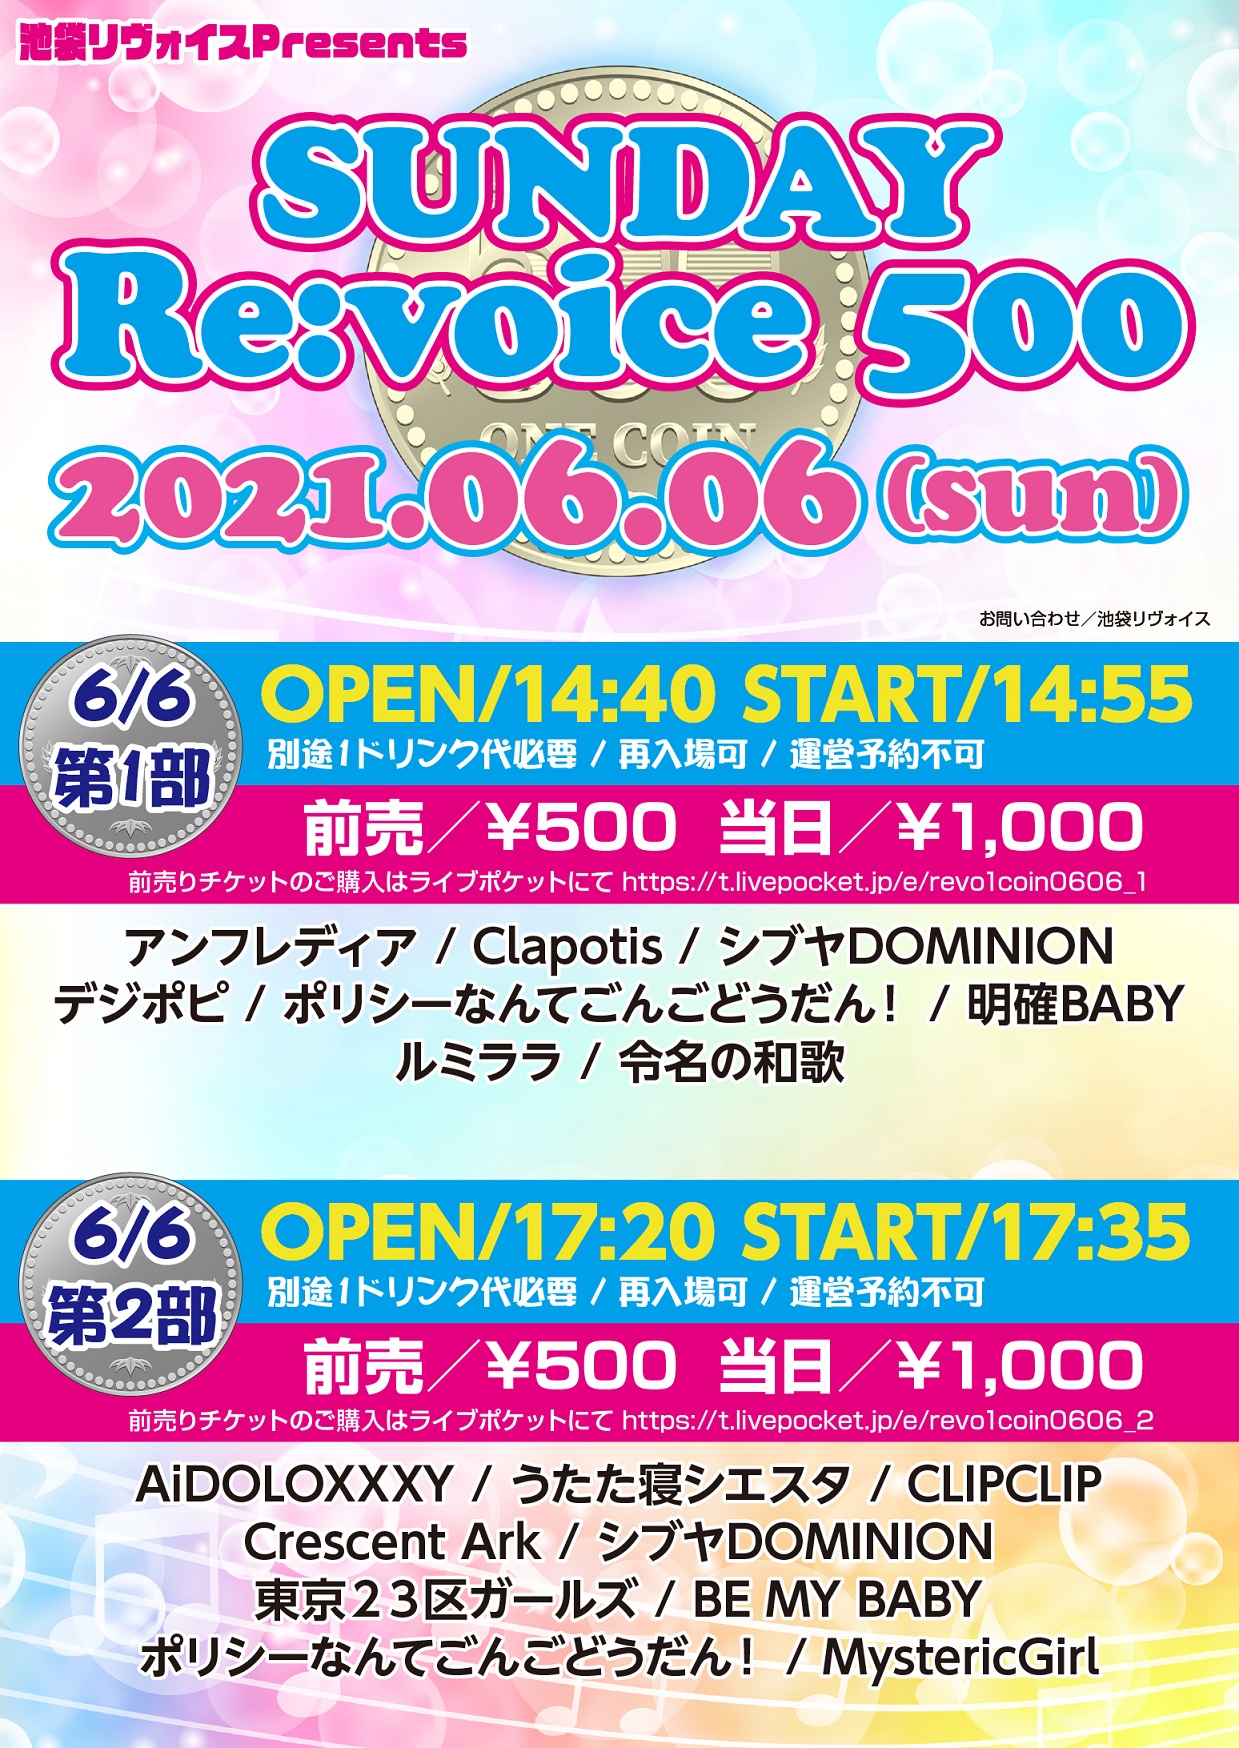 【第二部】SUNDAY Re:voice 500